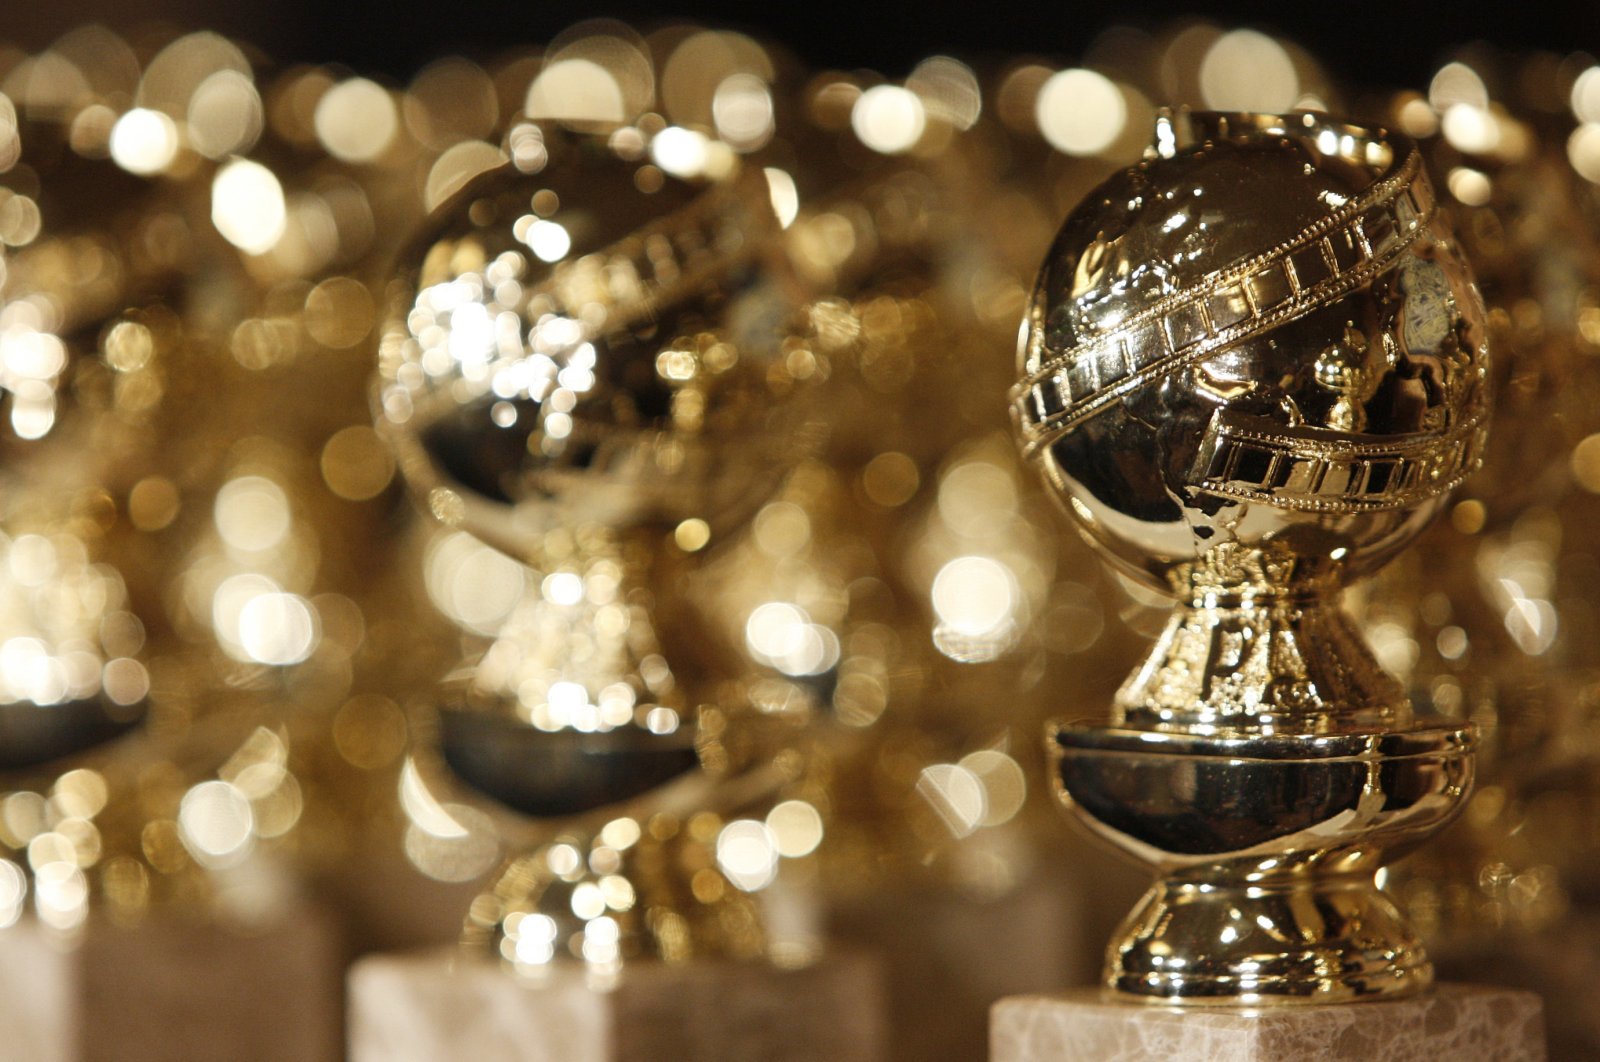 Hari penghakiman untuk Golden Globes tanpa bintang dan tanpa host di cakrawala